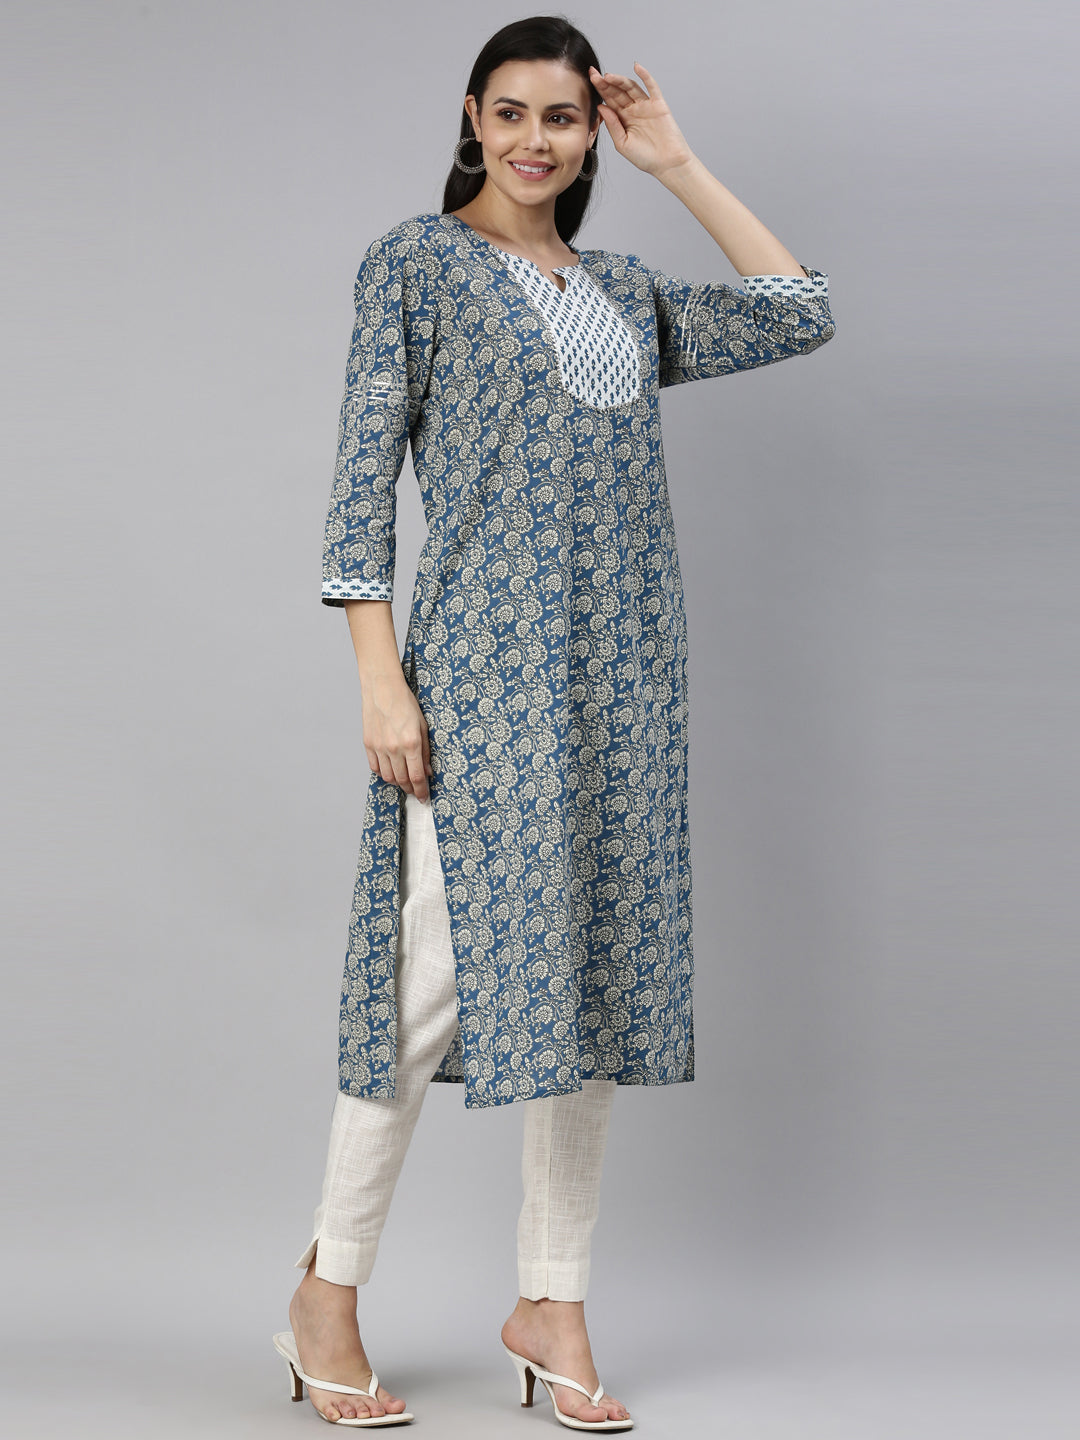 Neeru's Blue Color Cotton Fabric Kurta